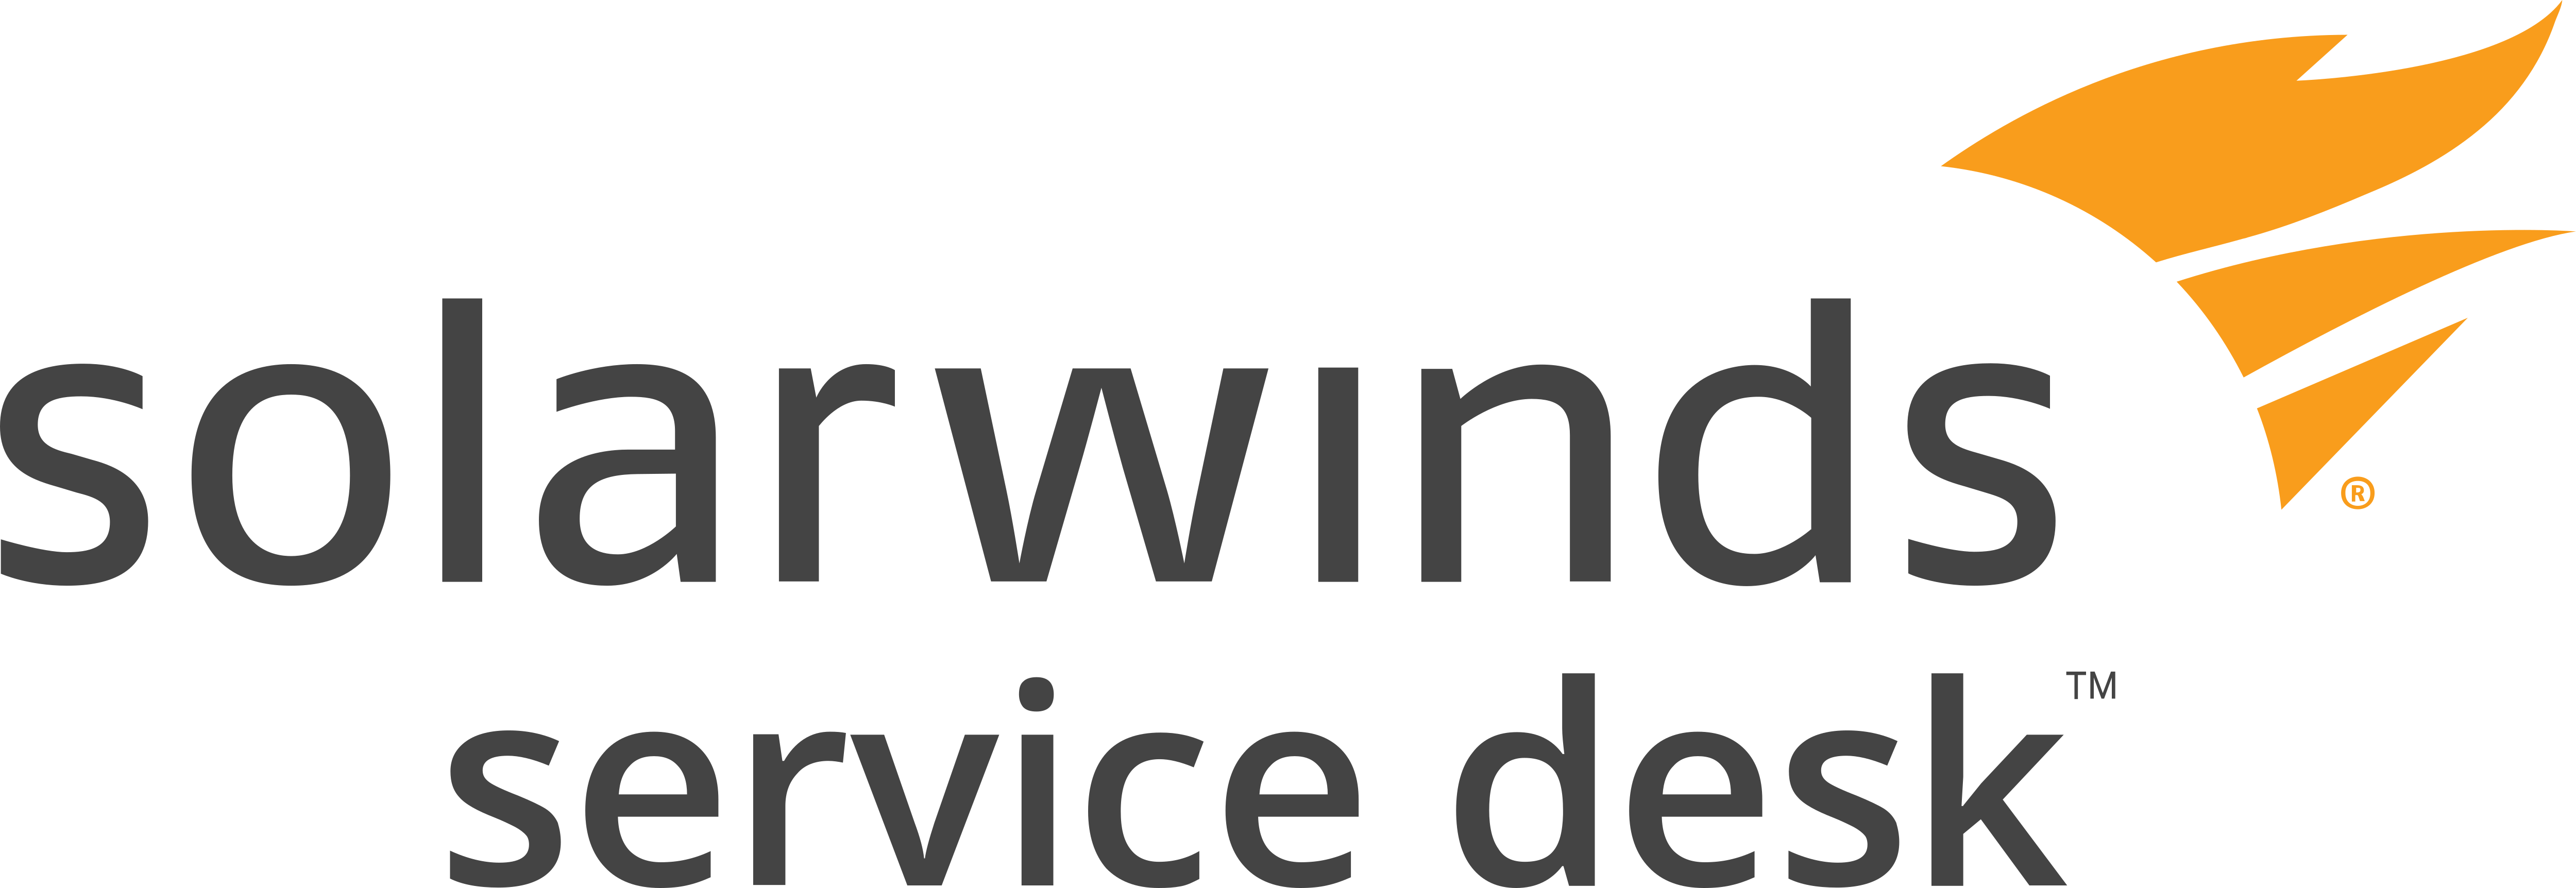 Solarwinds Service Desk